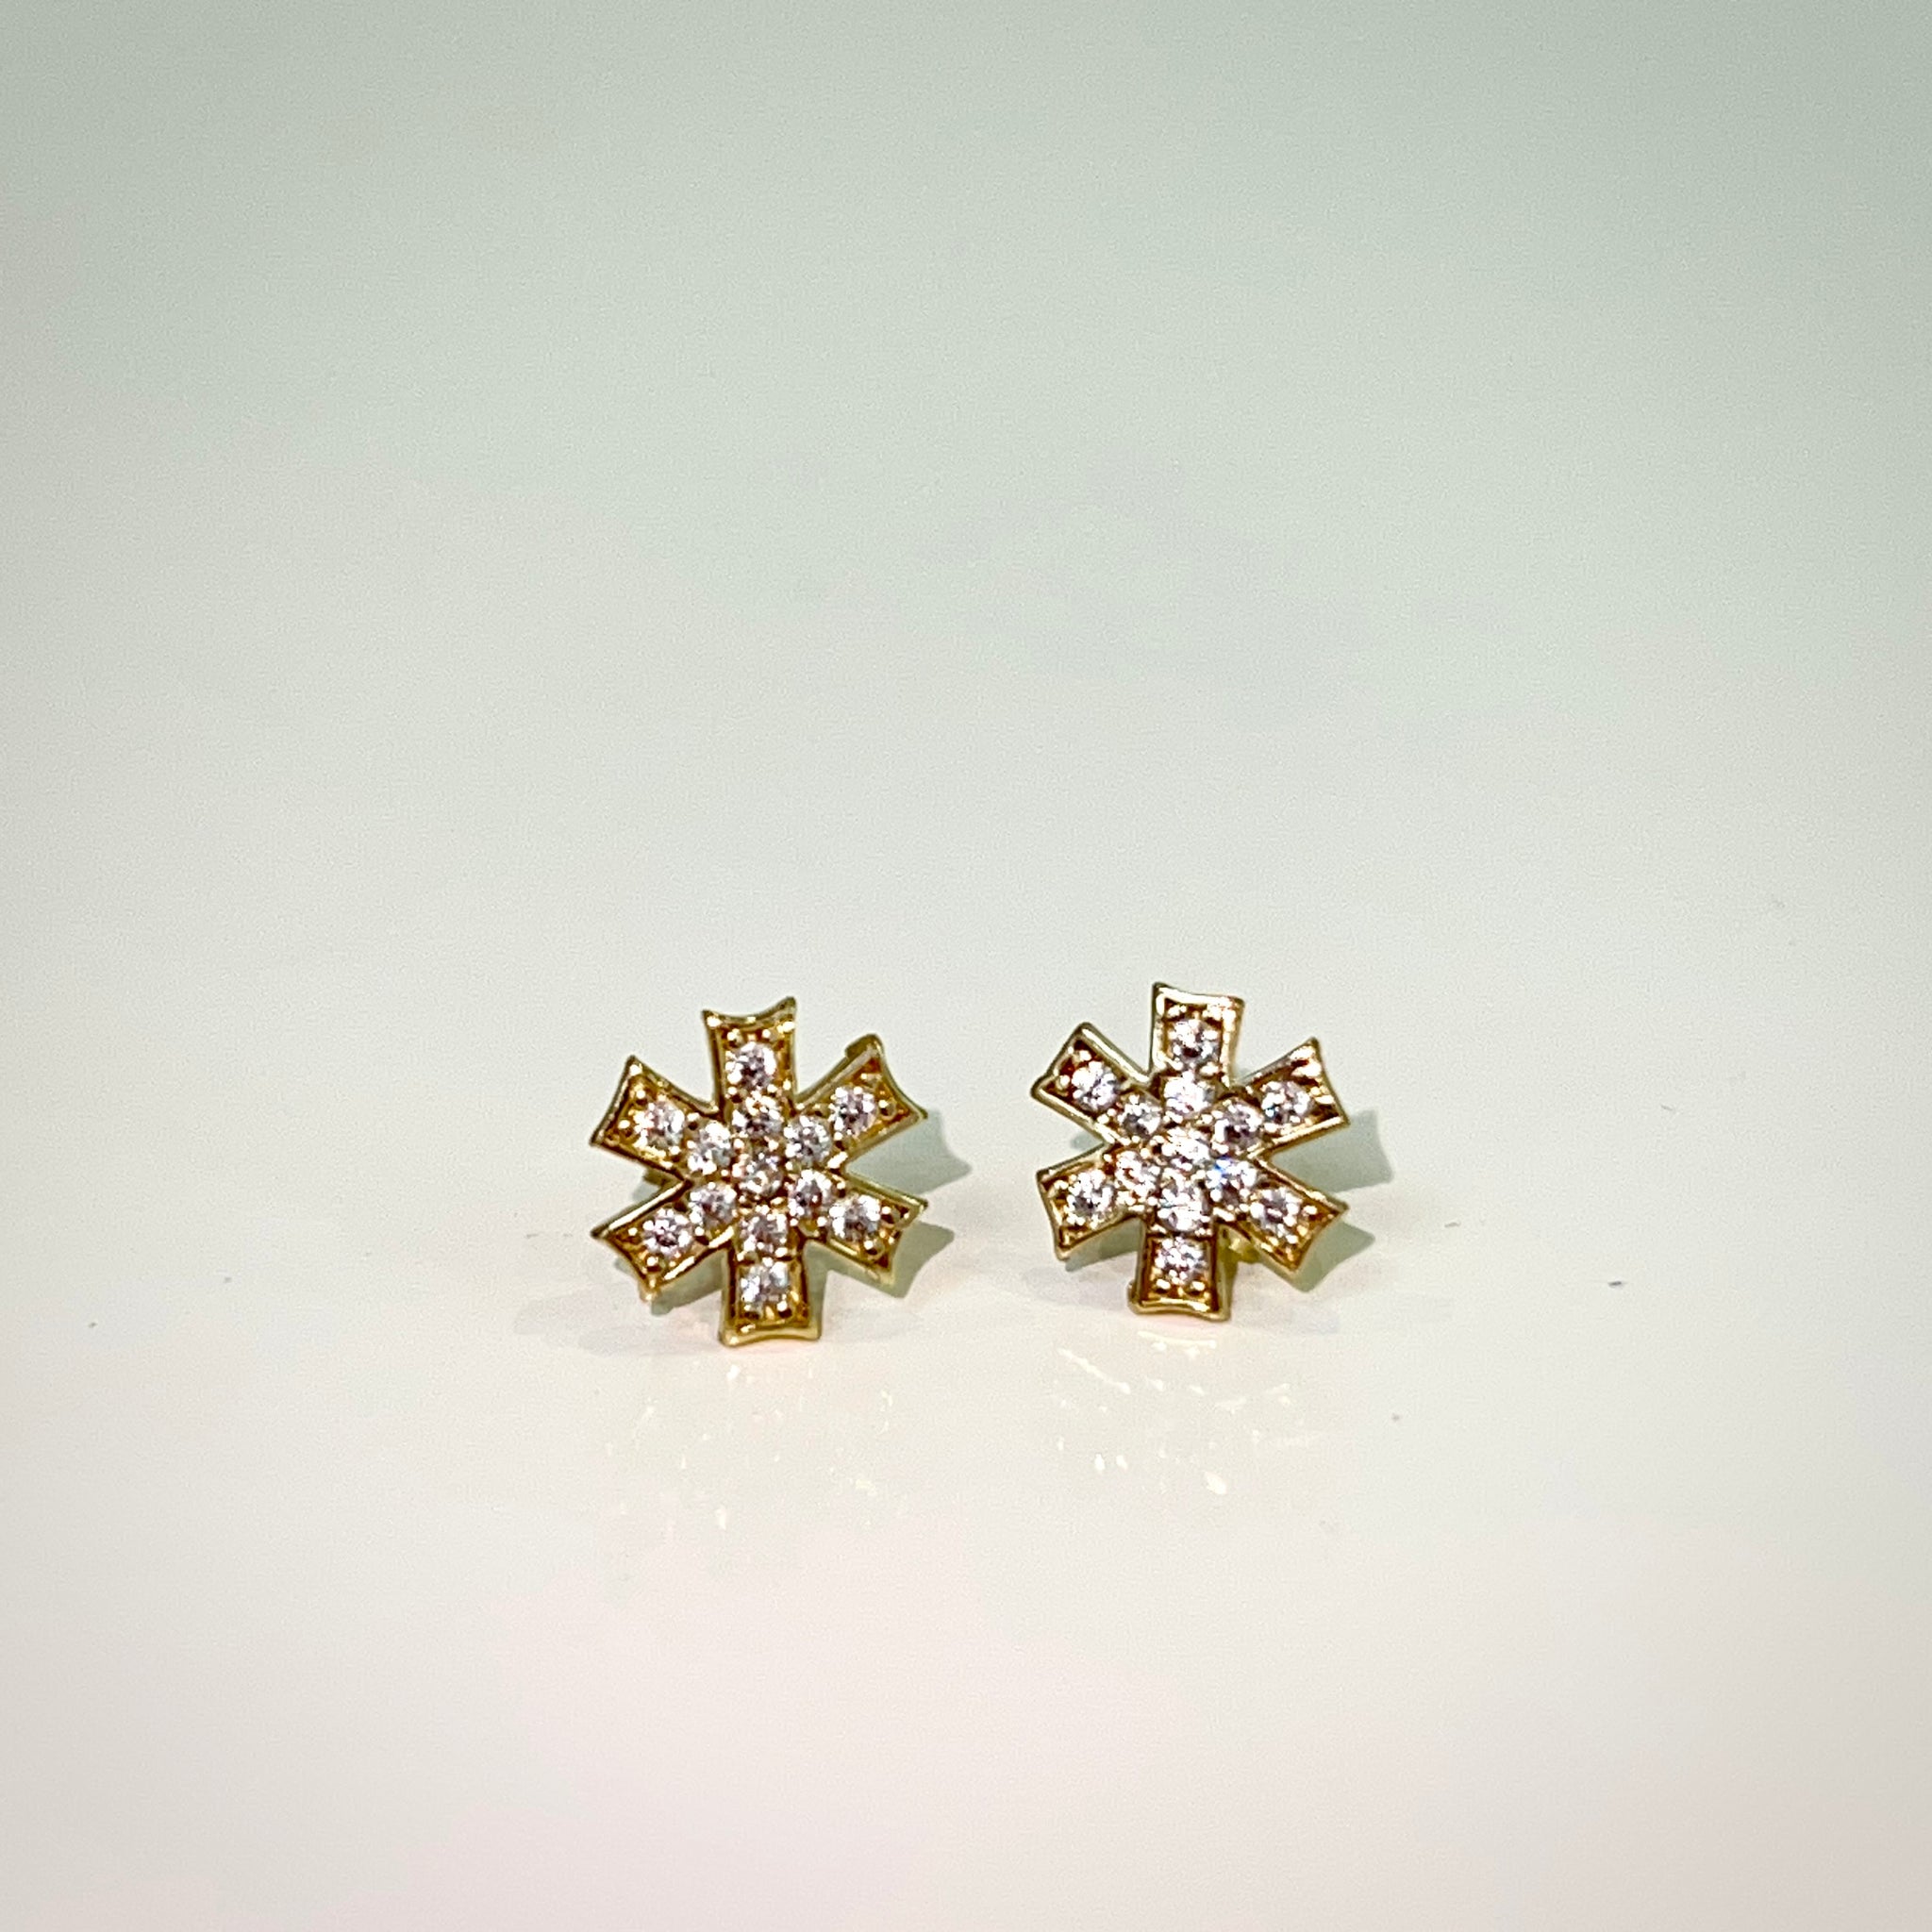 Ice Flake Earrings - 14 carat gold - Cubic Zirkonia Stones